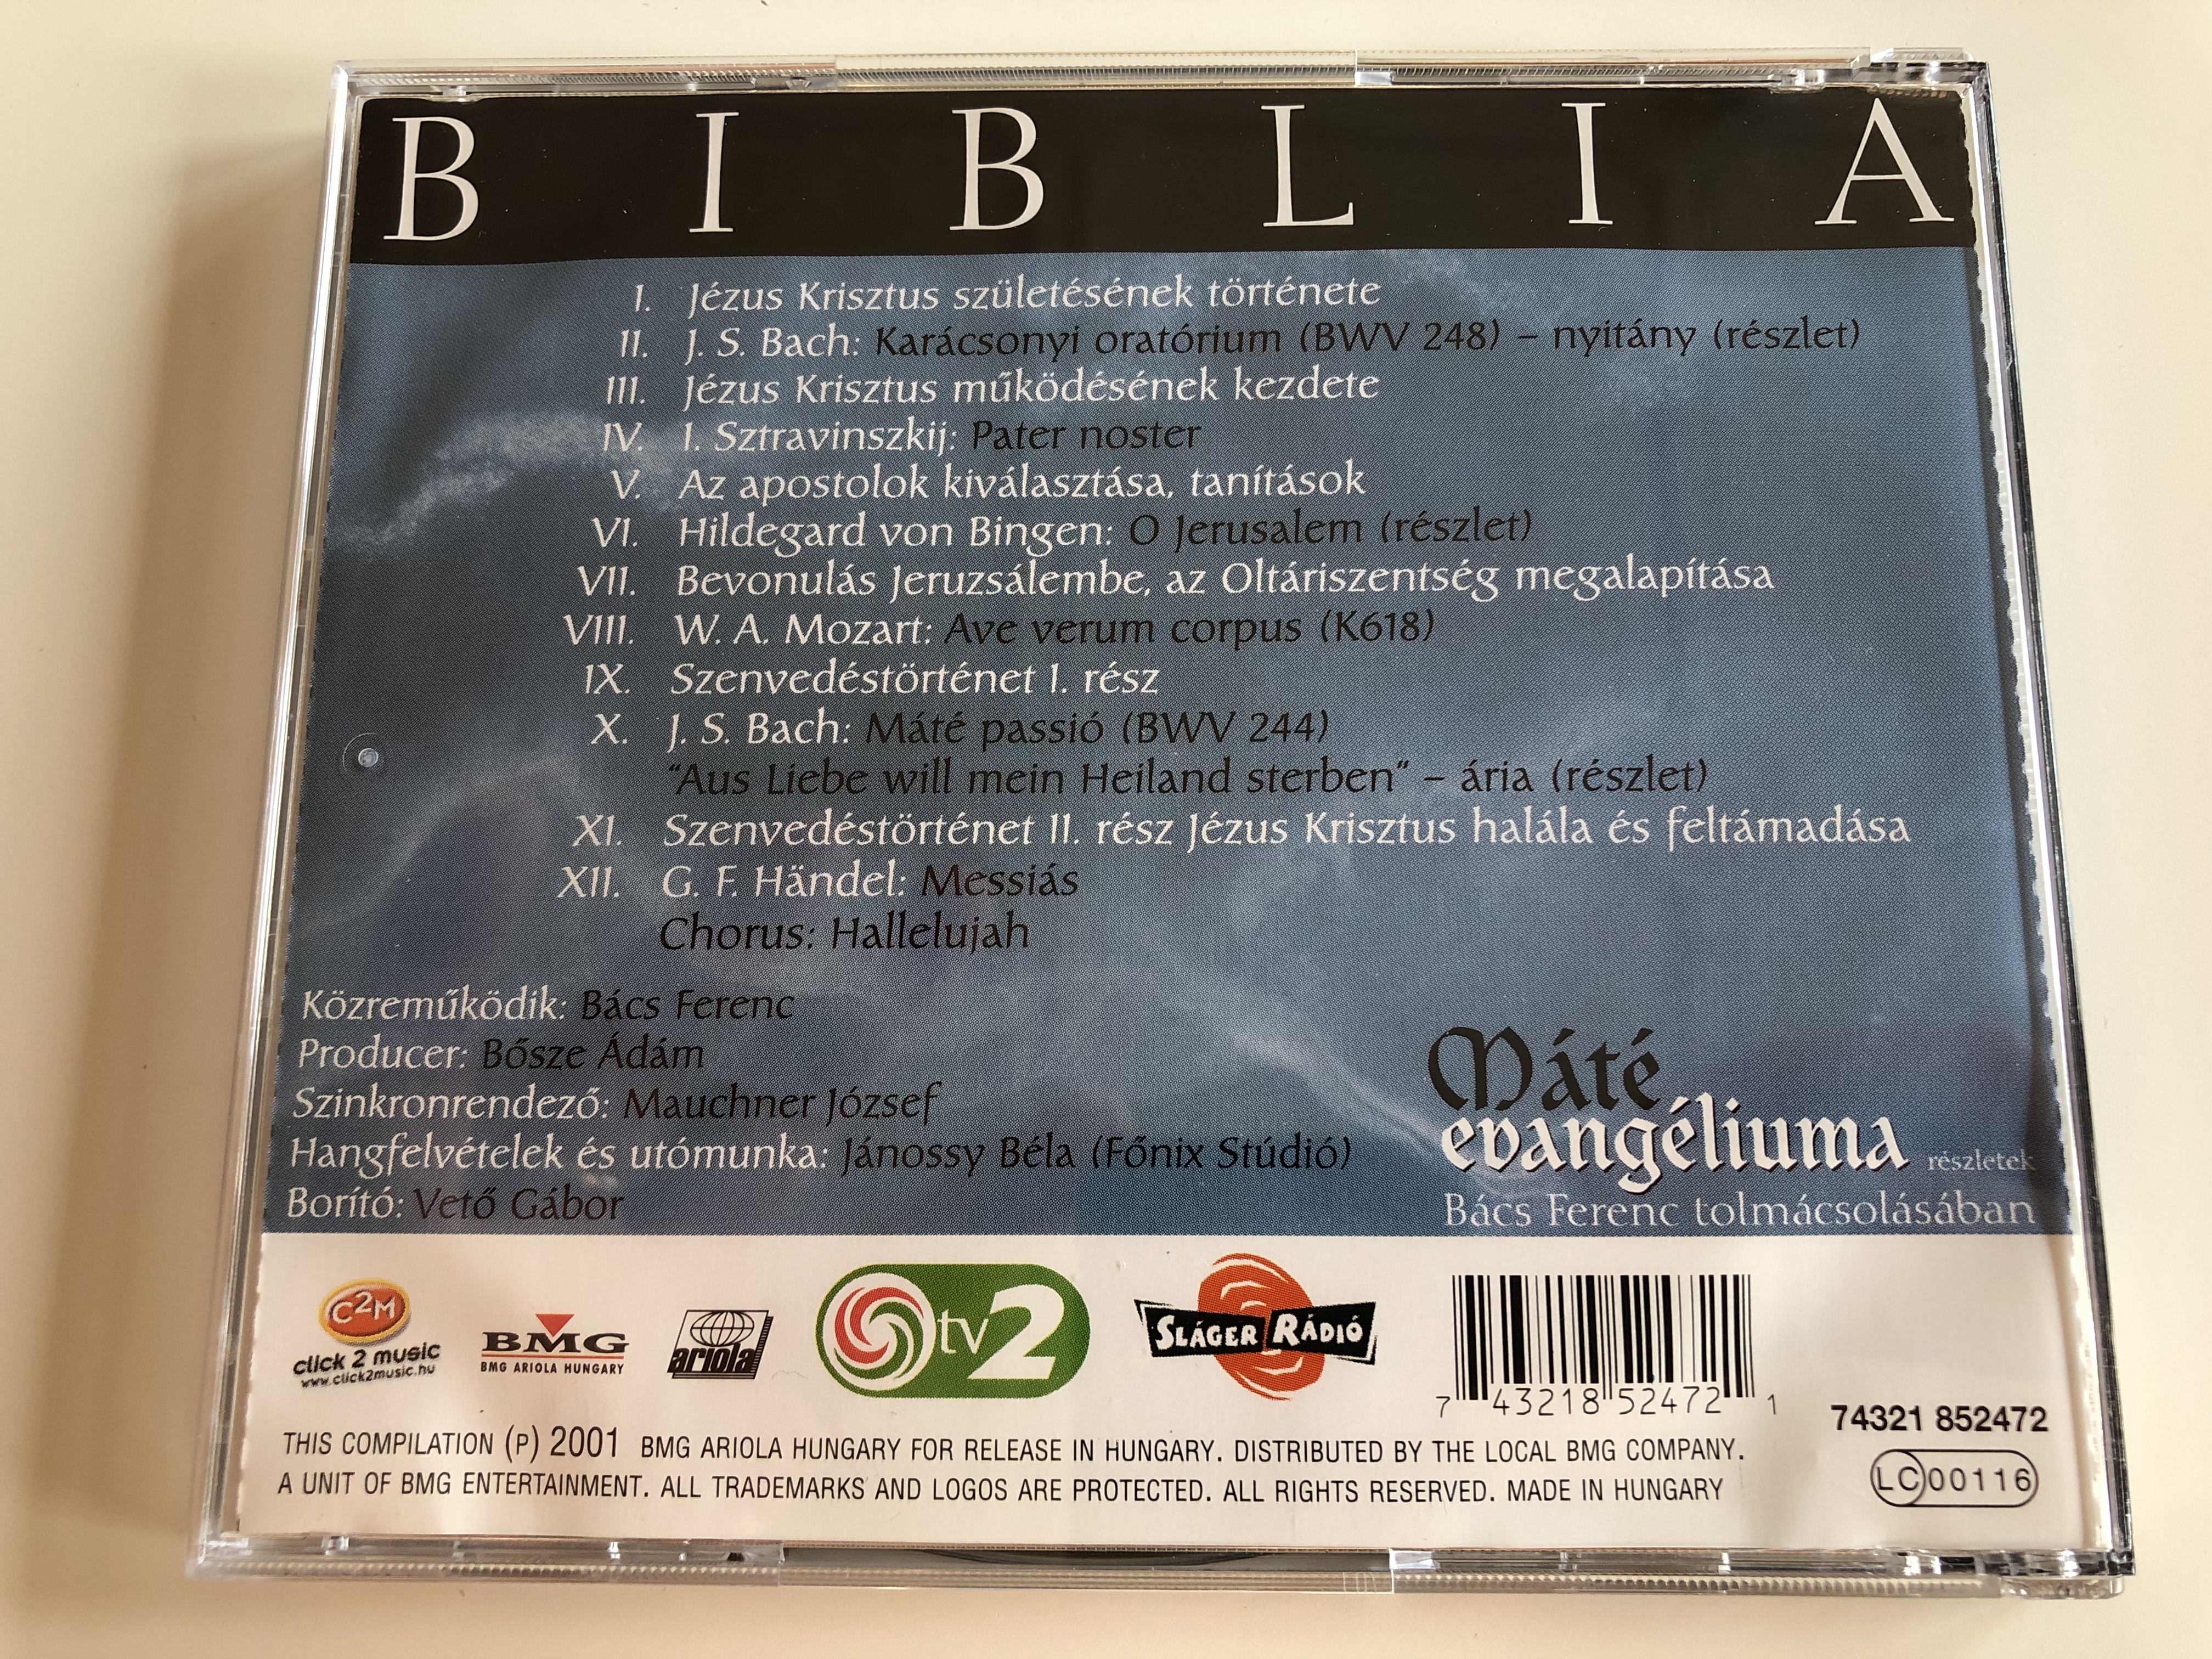 m-t-evang-liuma-r-szletek-audio-cd-2001-biblia-the-gospel-according-to-matthew-in-hungarian-language-excerpts-4.jpg